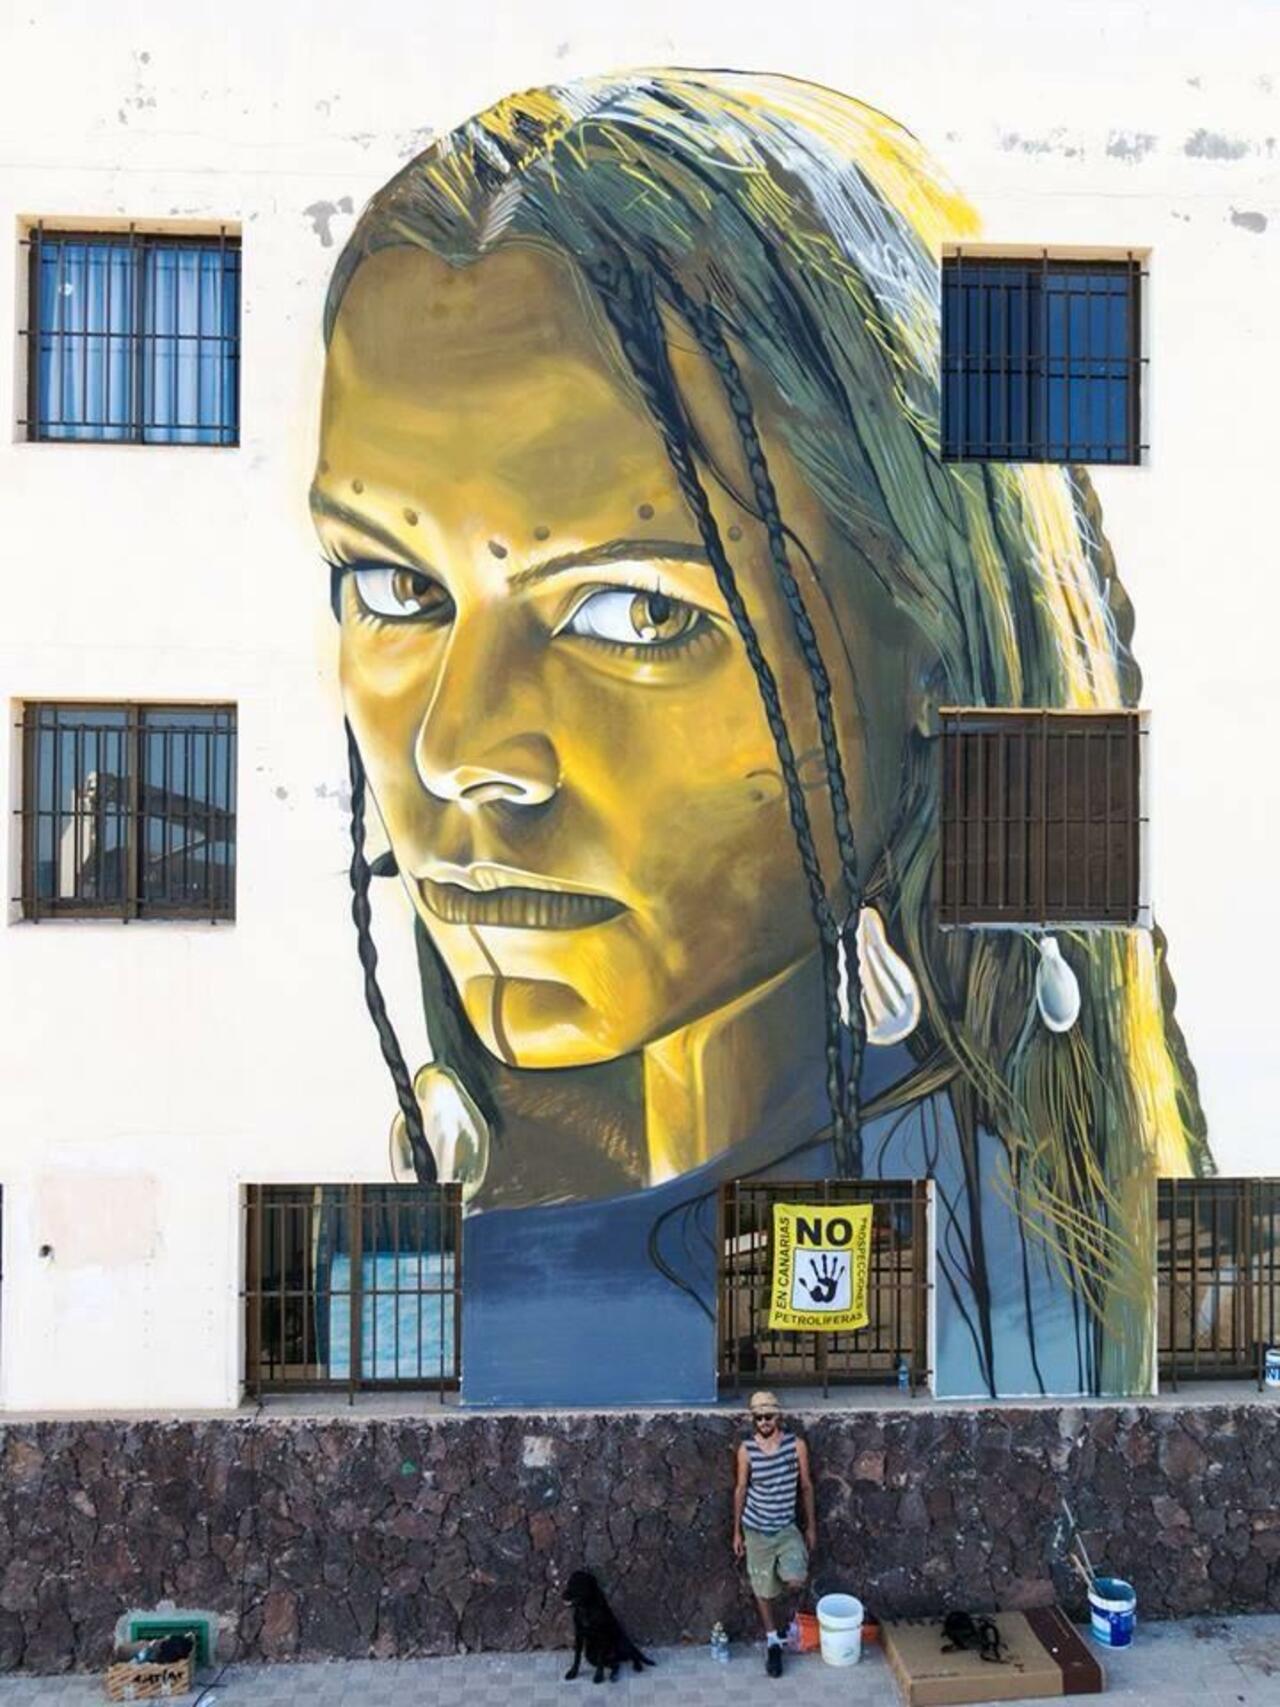 RT @designopinion: Sabotaje Al Montaje @sabotajeal new Street Art portrait in Fuerteventura #art #mural #graffiti #streetart http://t.co/AhMryh3ZQG